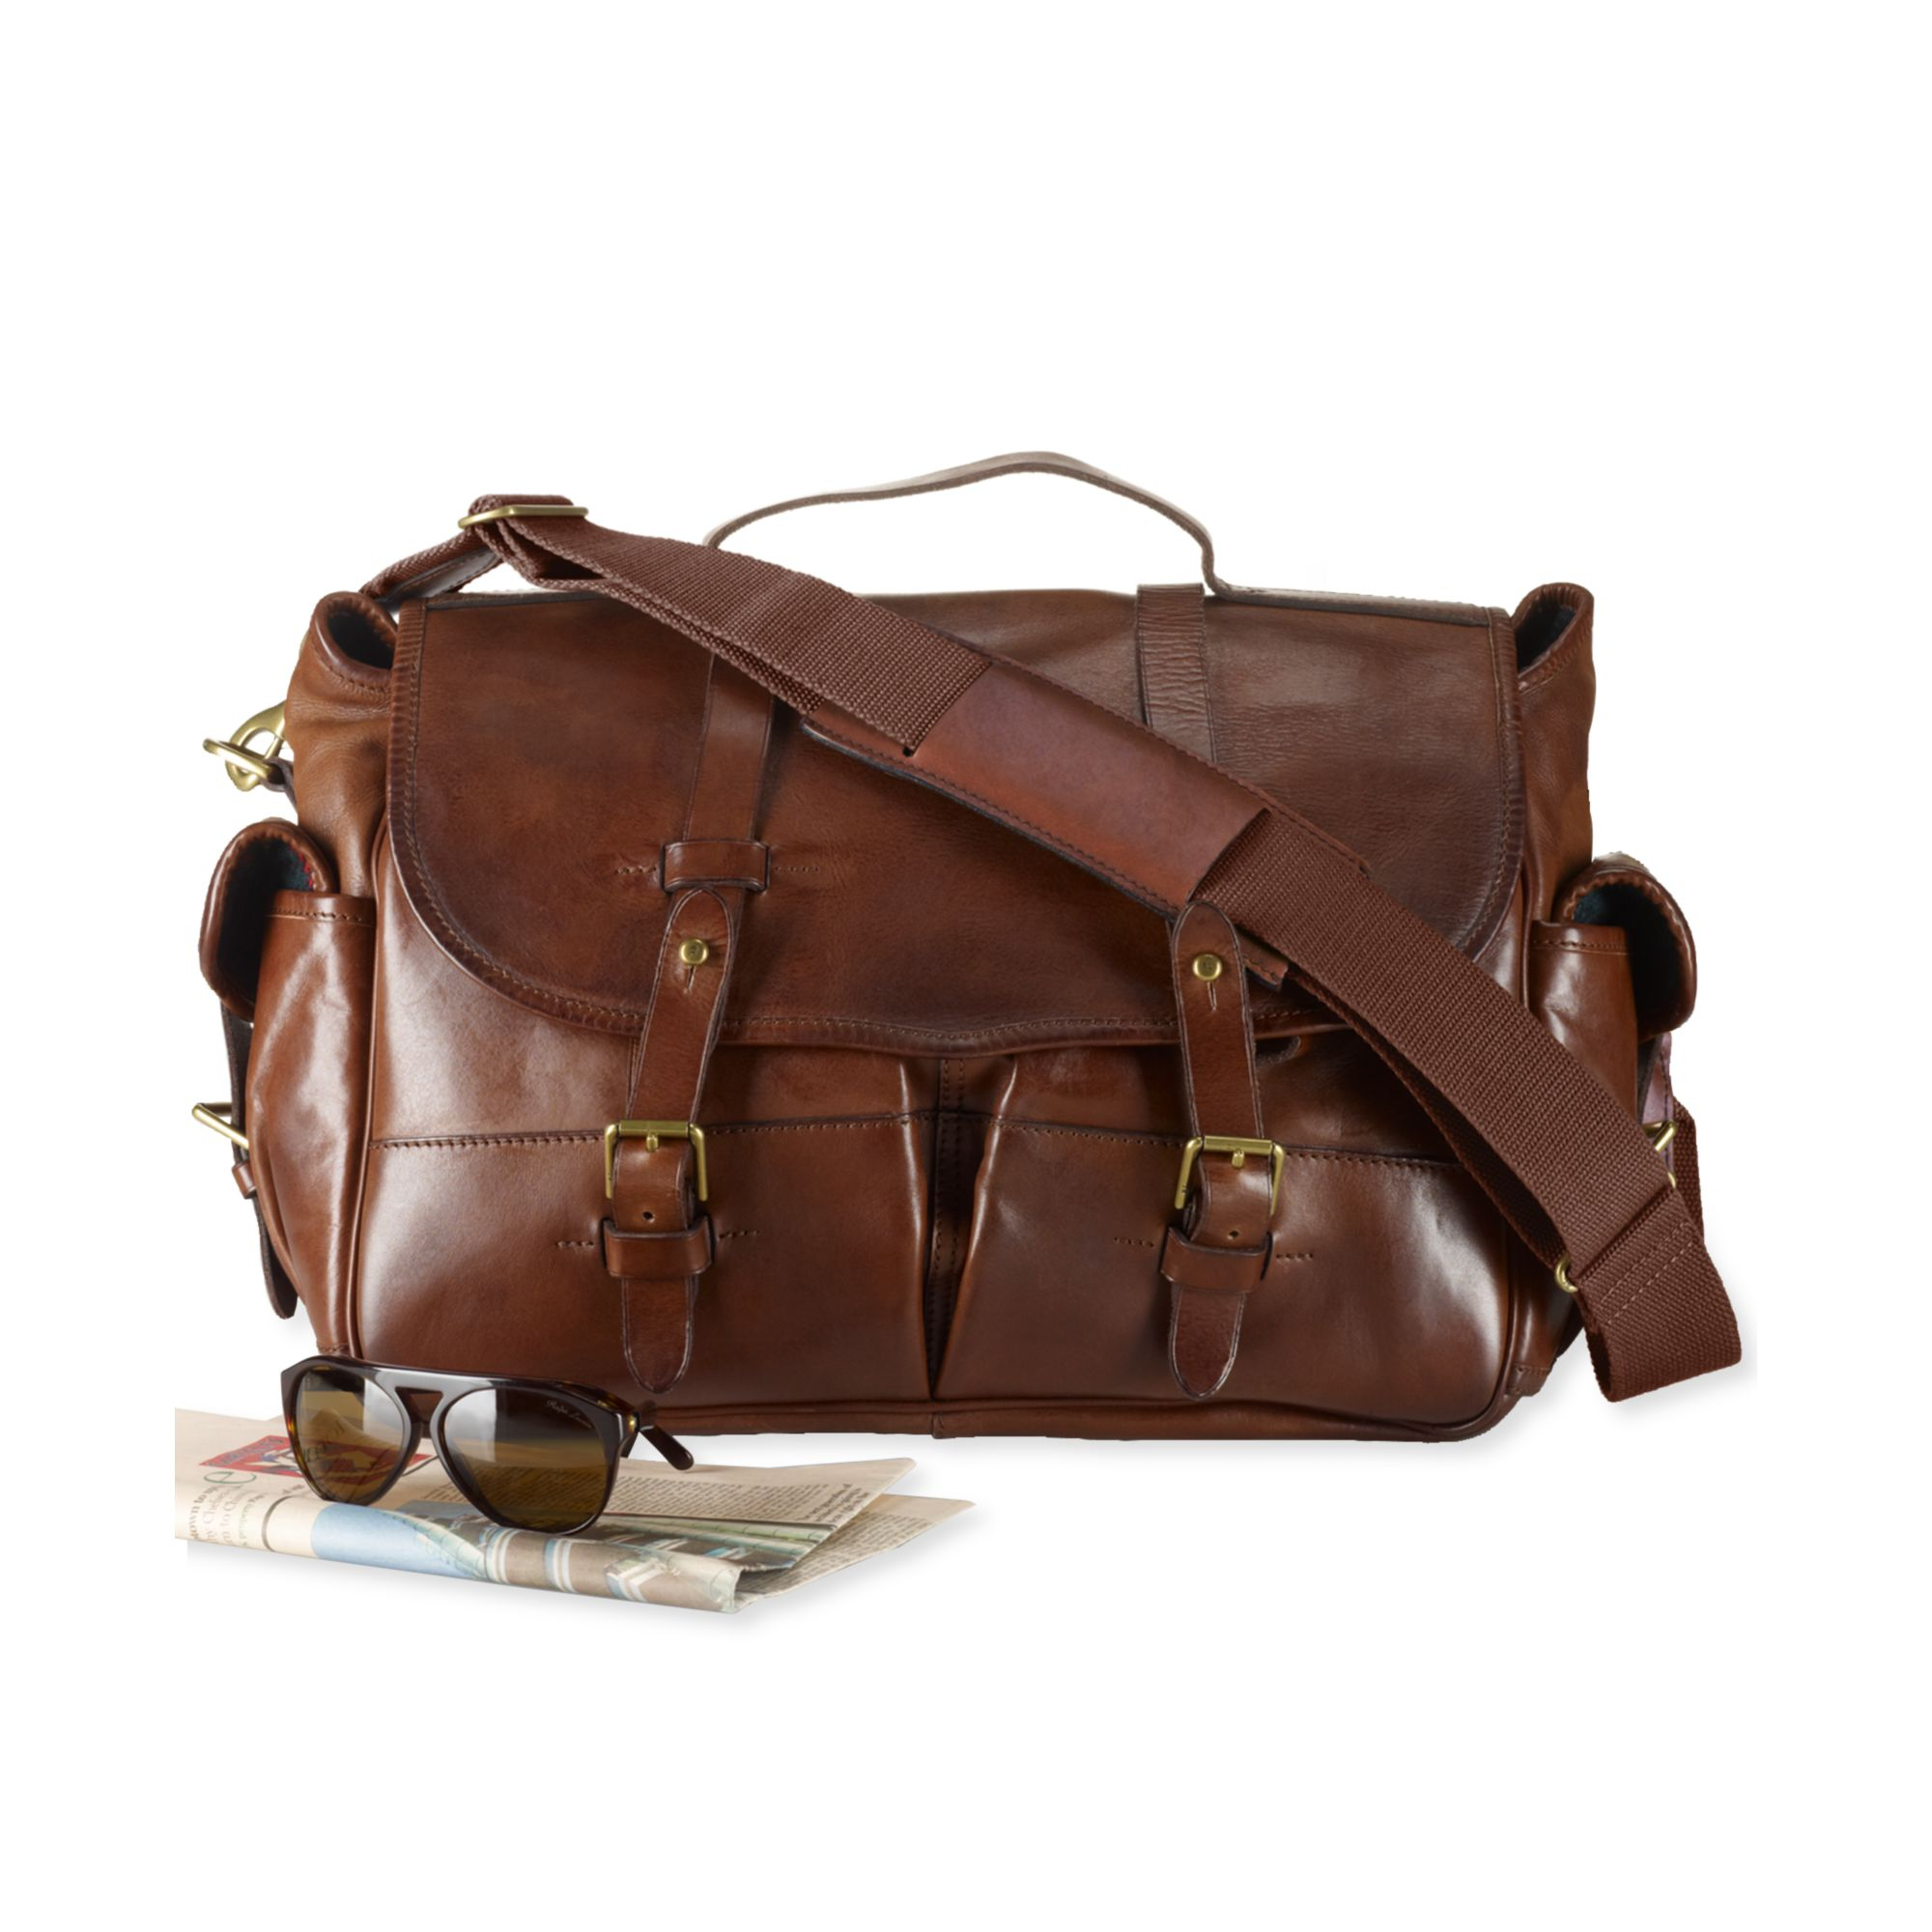 Ralph Lauren Leather Messenger Bag in Brown for Men - Lyst